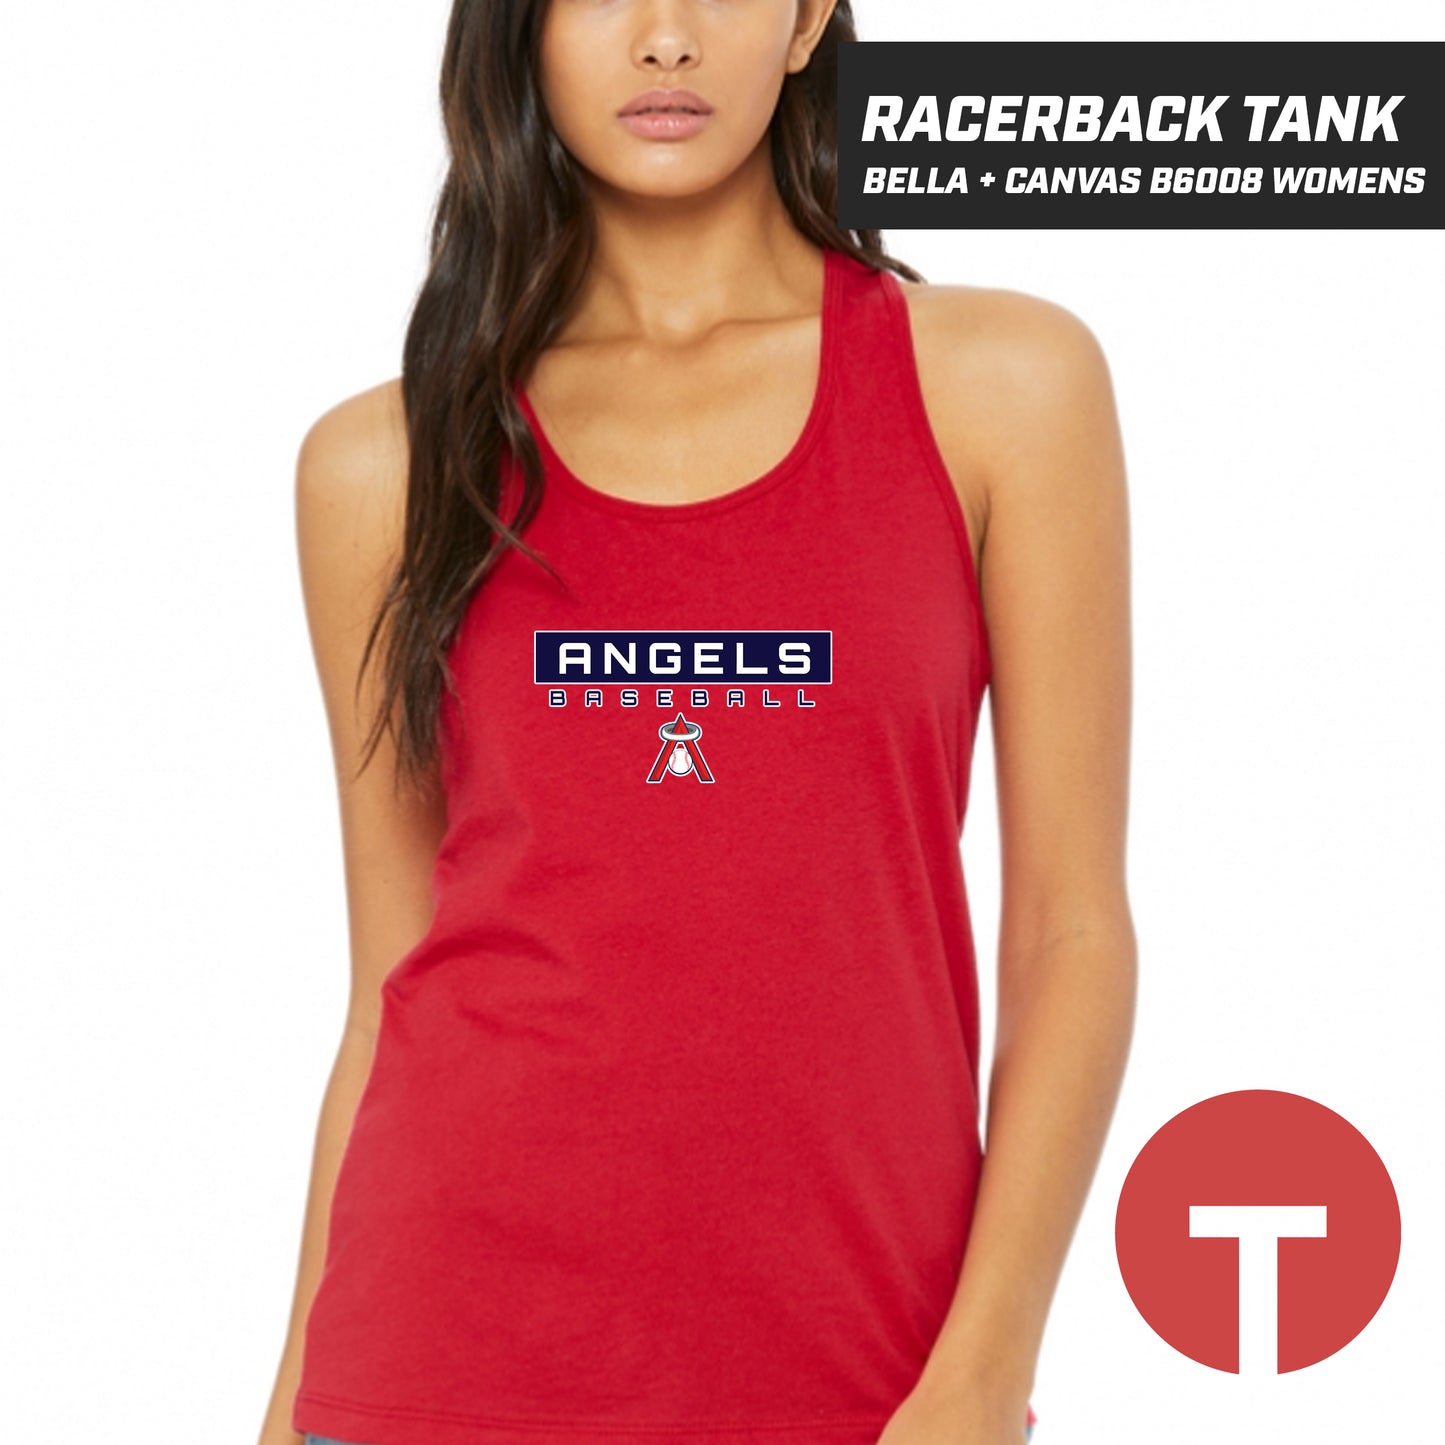 East Cobb Angels - LOGO 3 - Bella + Canvas B6008 Women's Jersey Racerback Tank